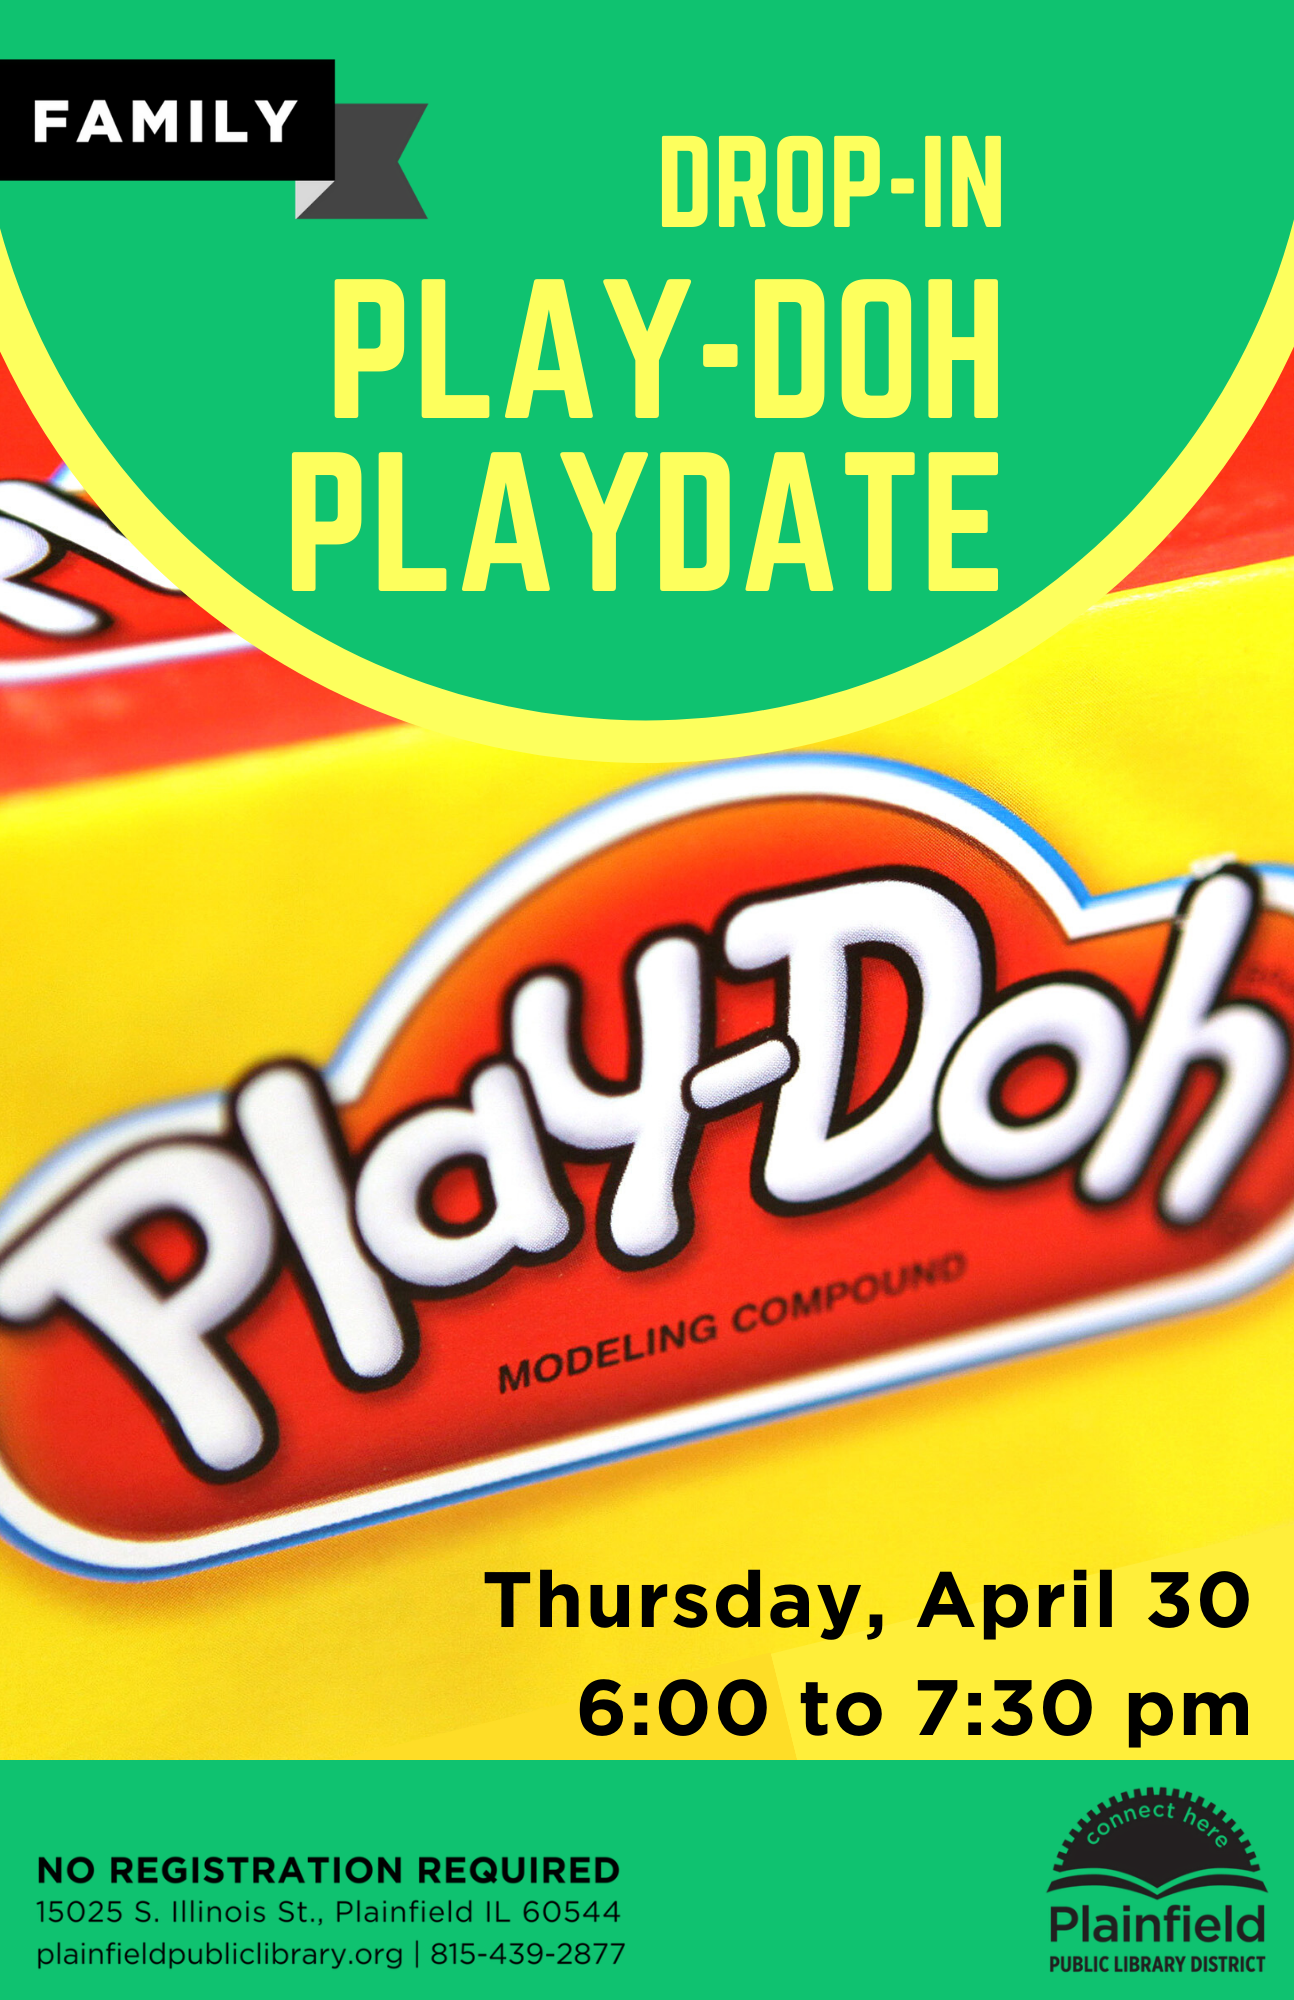 Play-Doh Playdate